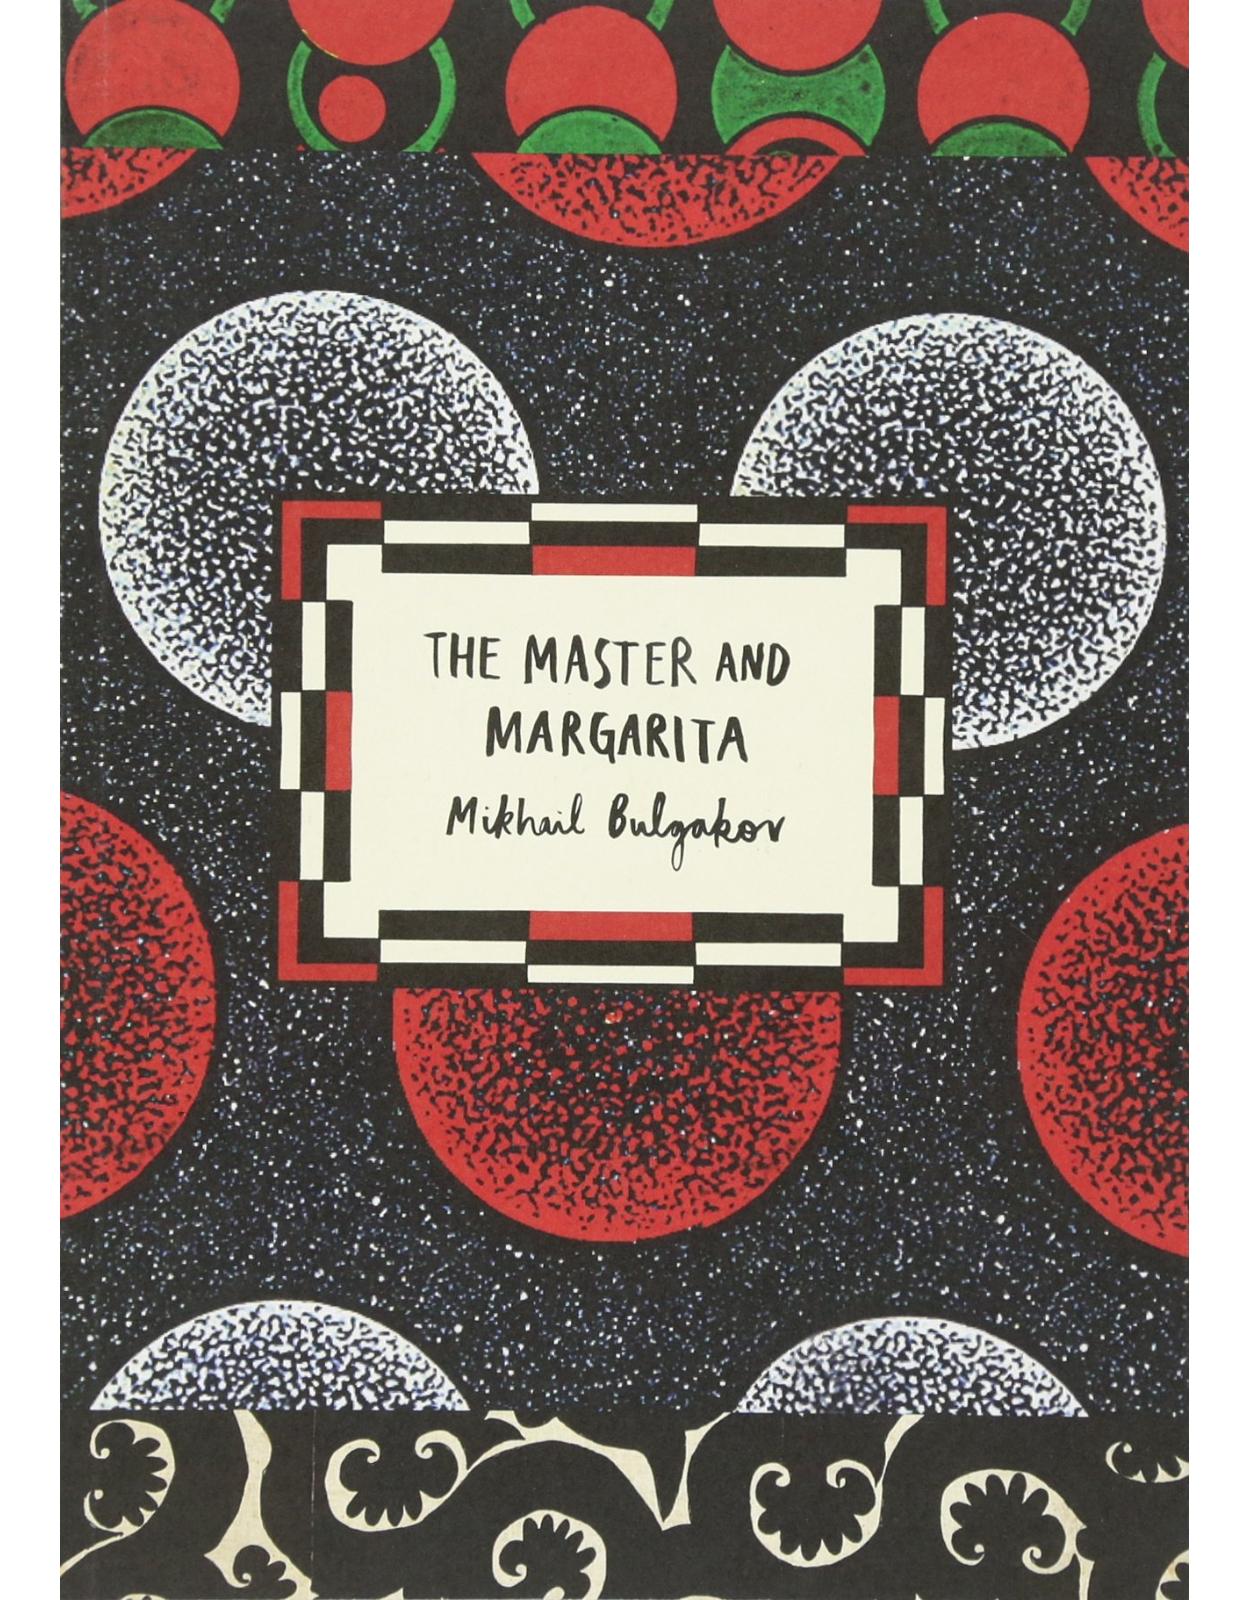 The Master and Margarita 